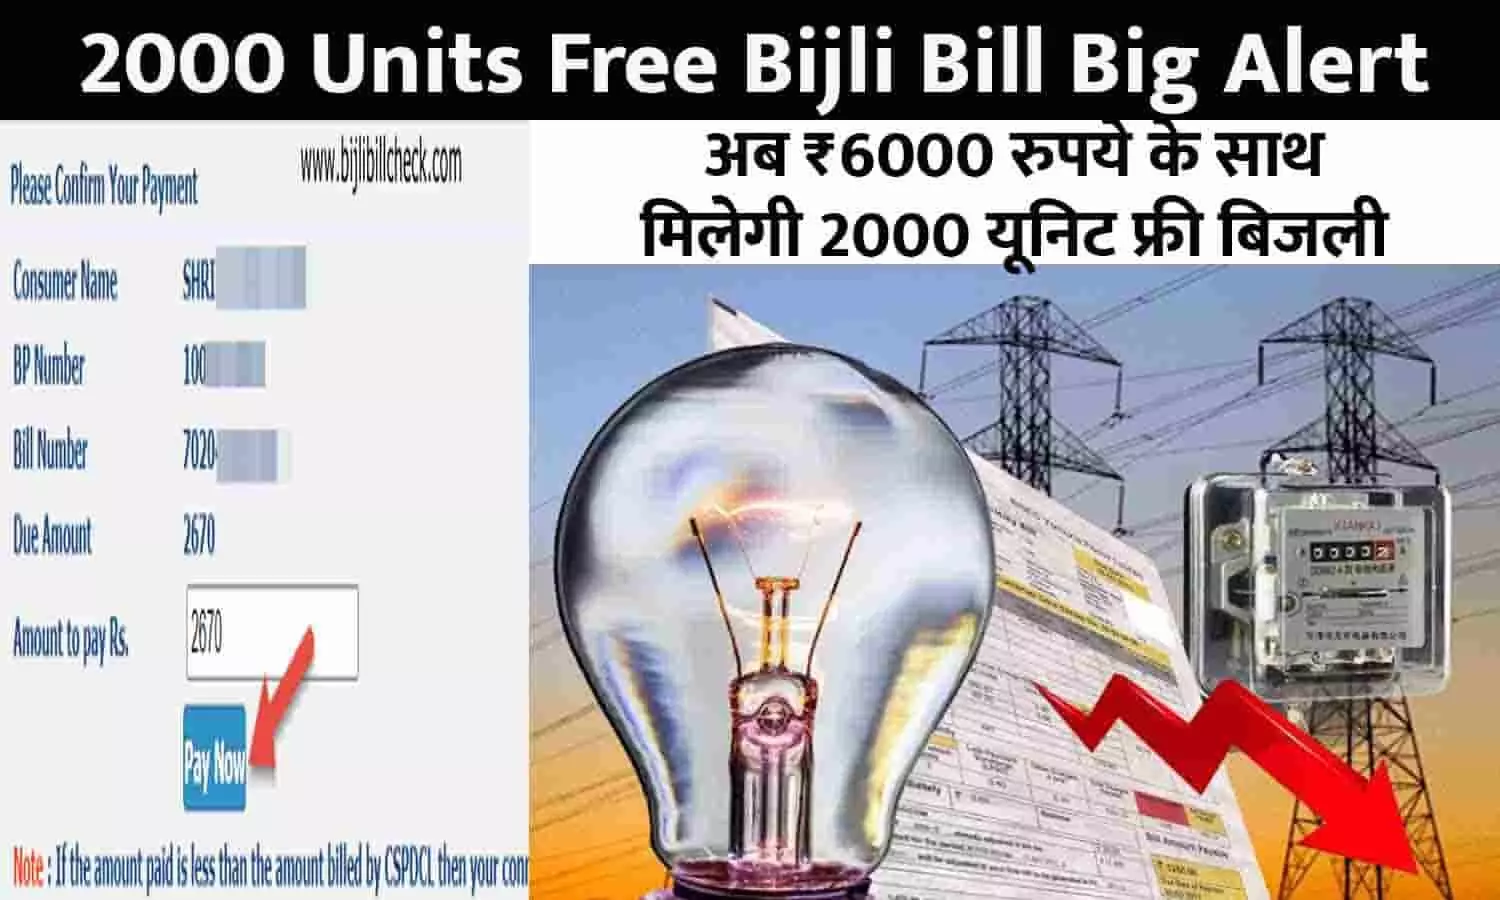 2000 Units Free Bijli Bill Big Alert: गुड न्यूज़! हो गया बड़ा ऐलान, अब ₹6000 रुपये के साथ मिलेगी 2000 यूनिट फ्री बिजली, तुरंत ध्यान दे